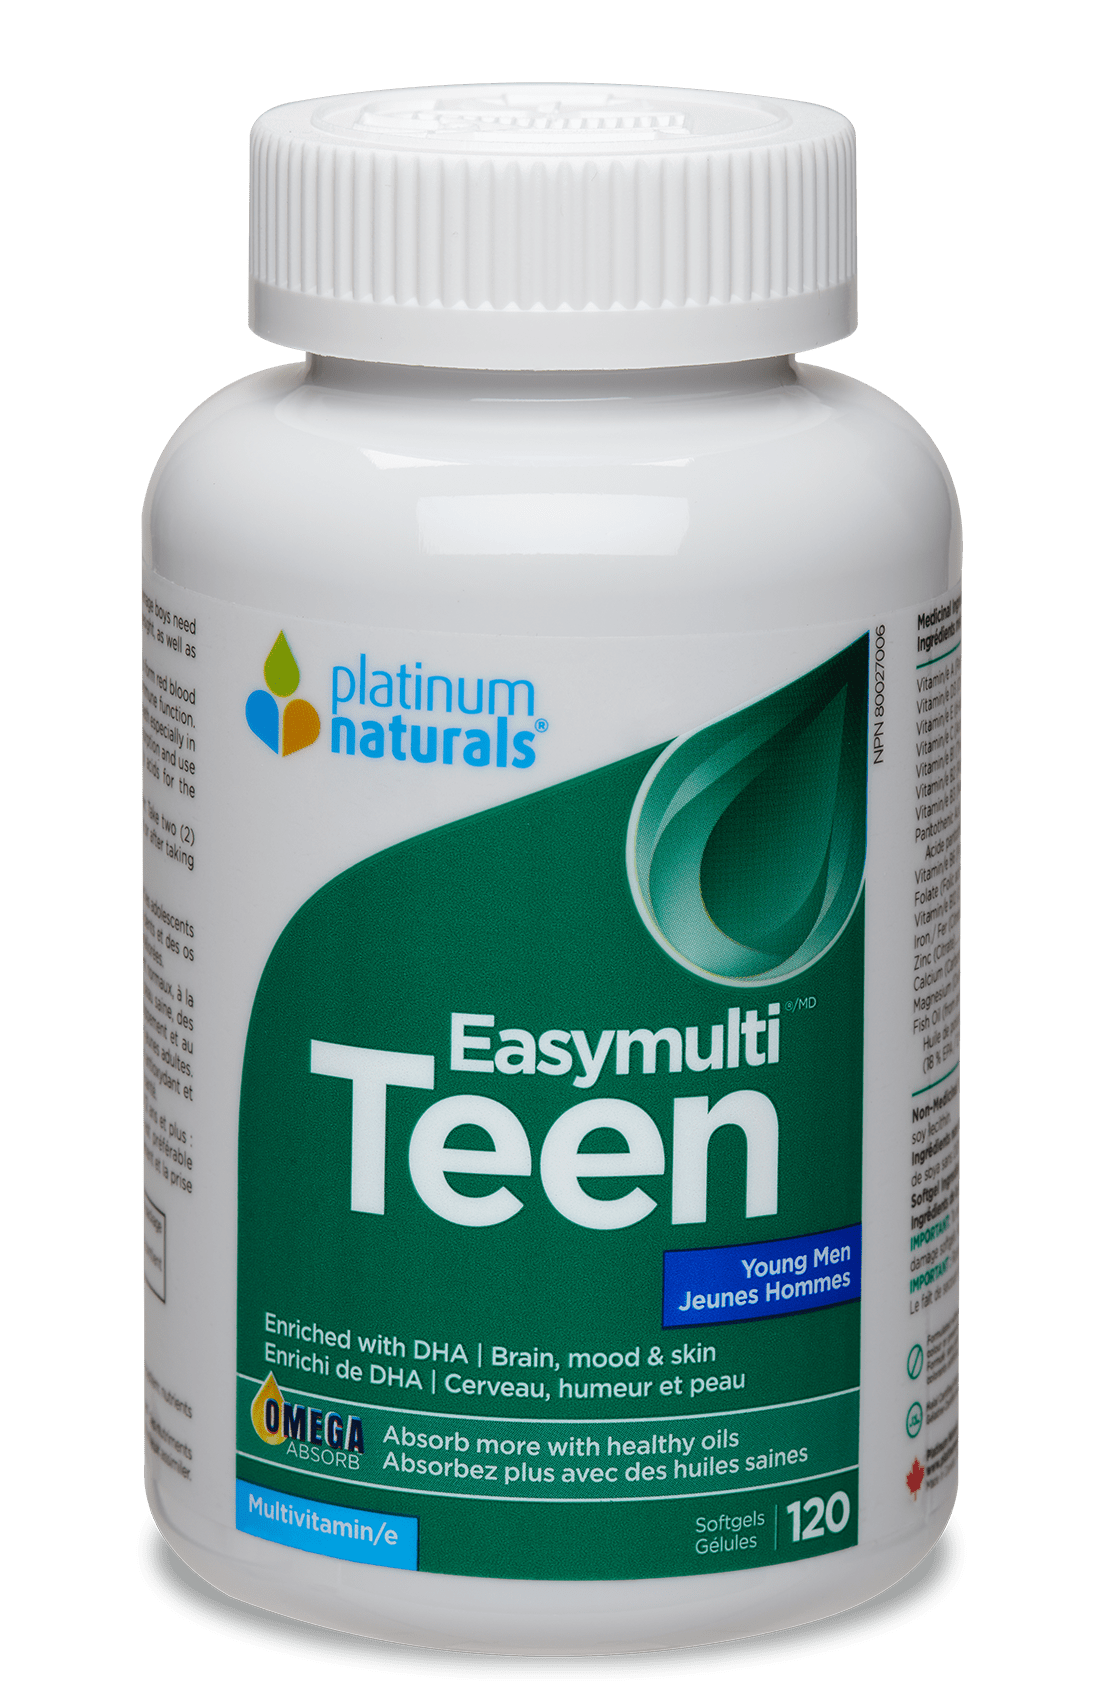 Easymulti Teen for Young Men Multivitamin cg-dev-platinumnaturals 120 